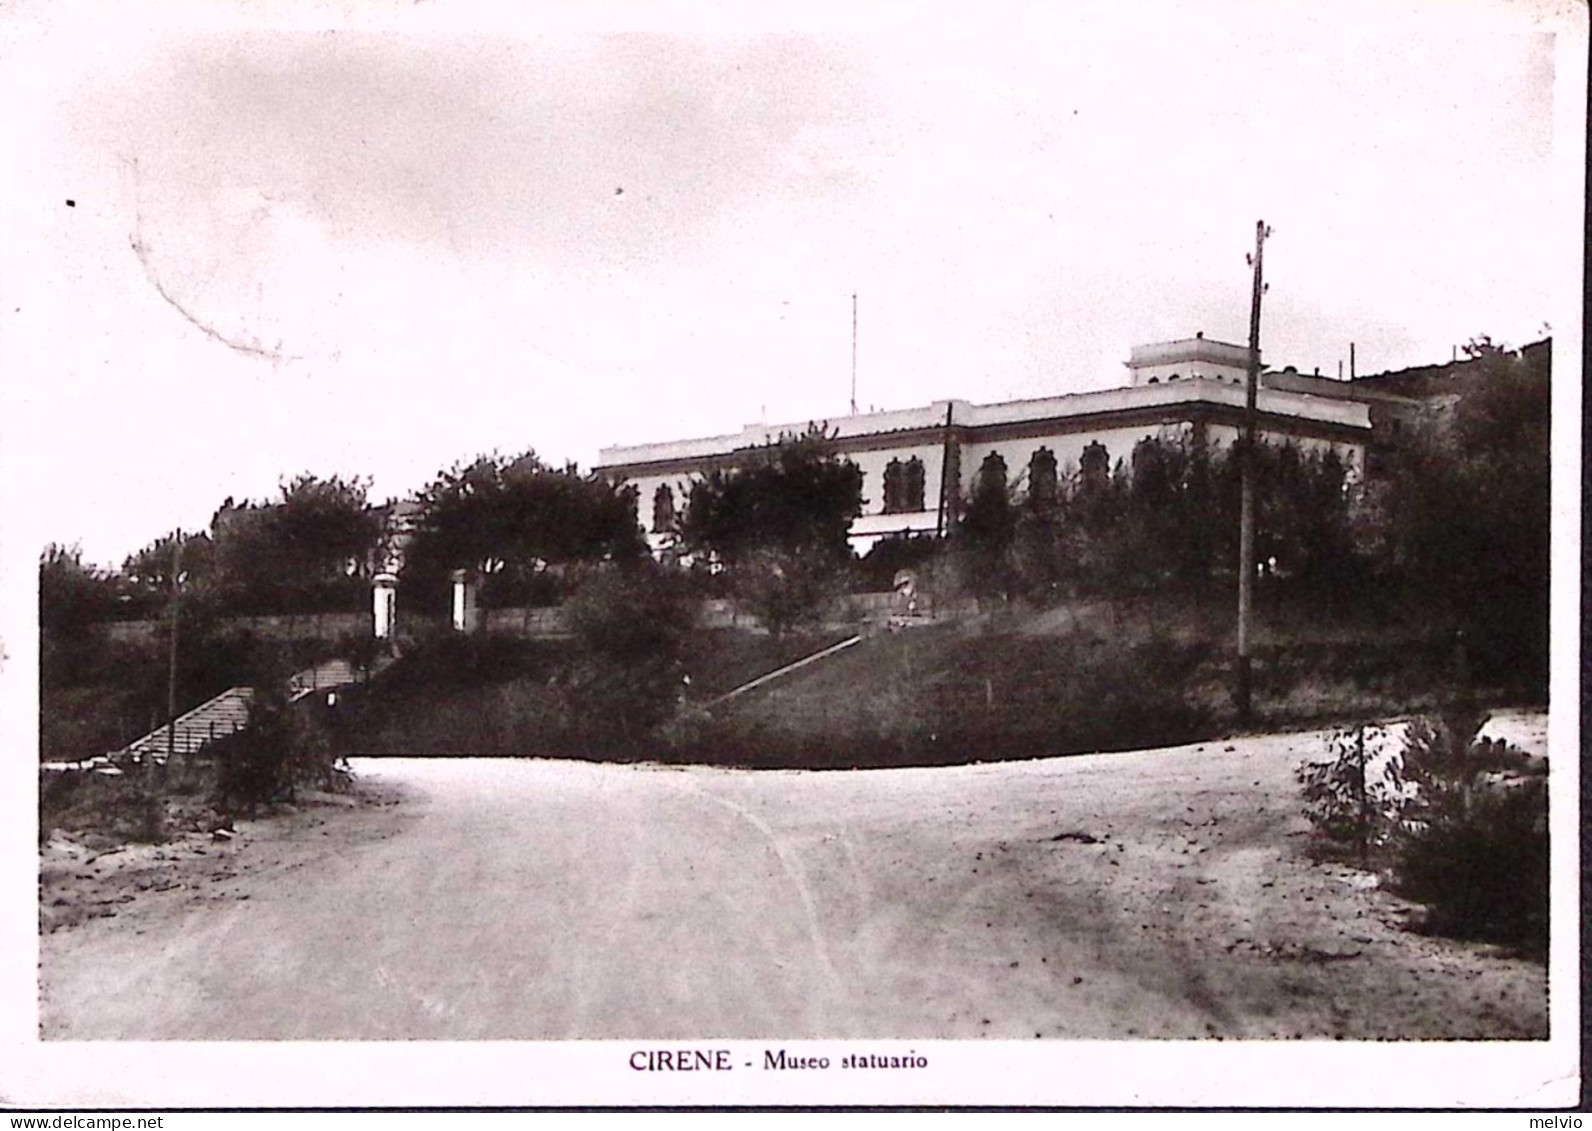 1940-LIBIA Cirene Museo Statuario Viaggiata Via Aerea XII^UPC C2 (16.9) - Libyen